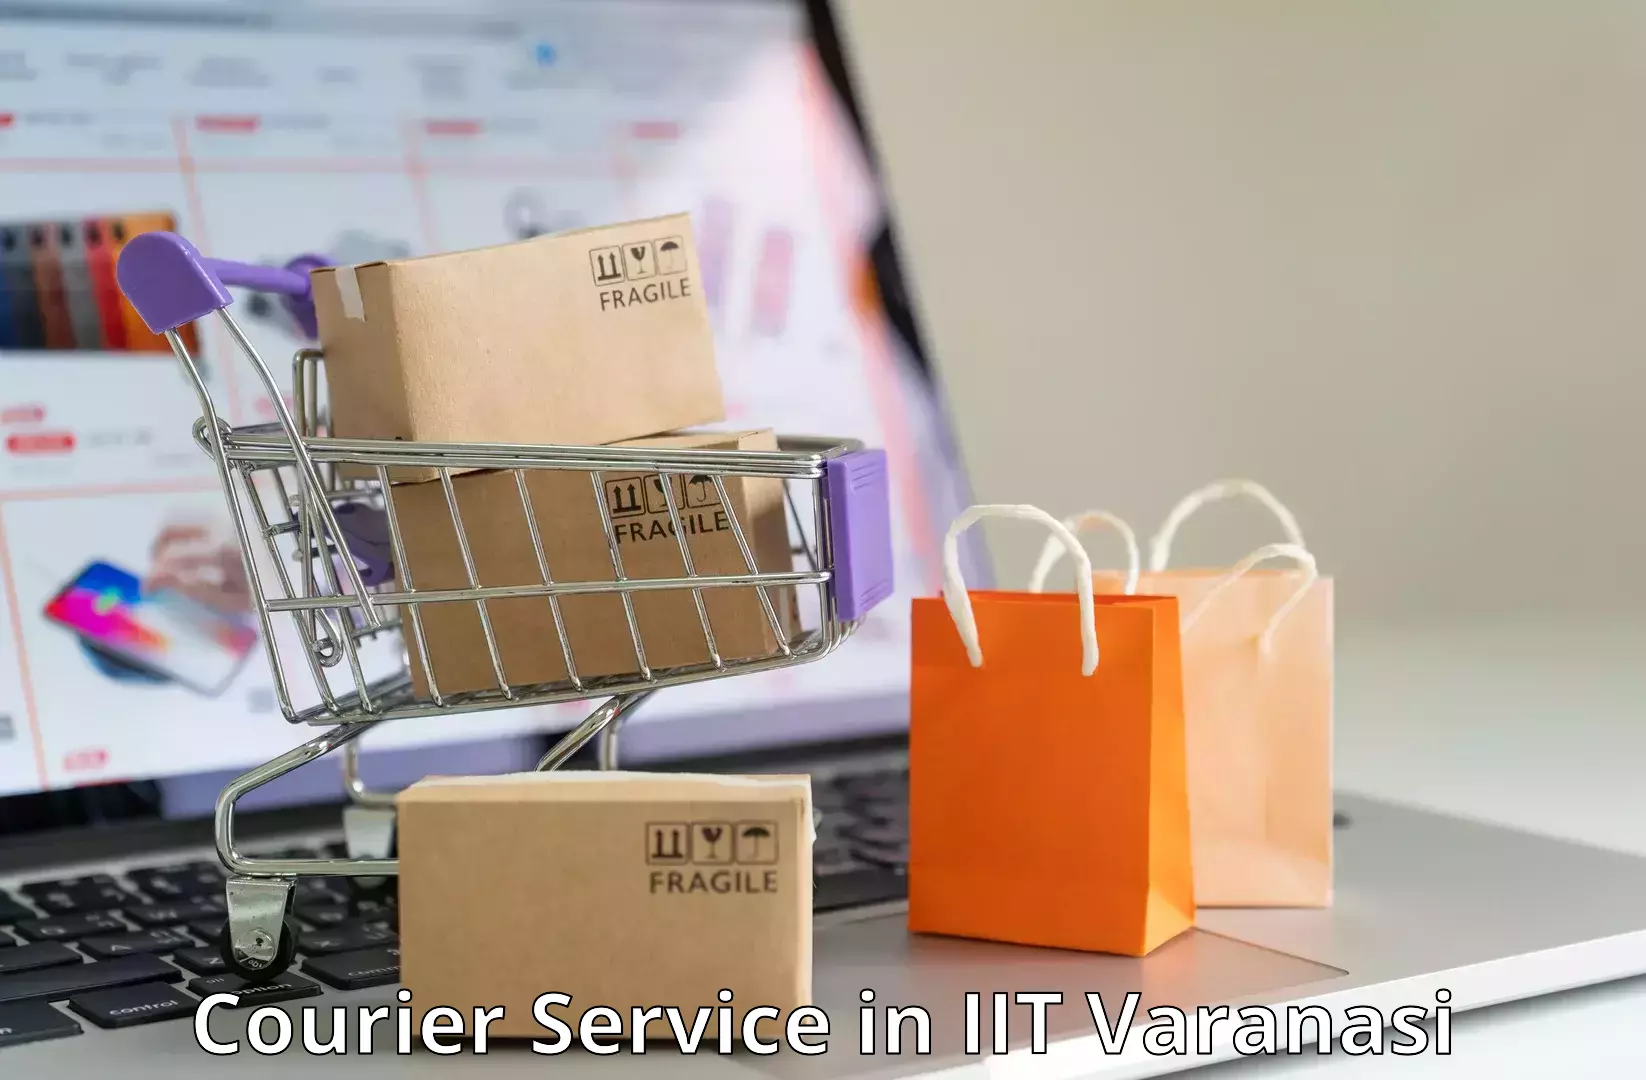 Fast shipping solutions in IIT Varanasi